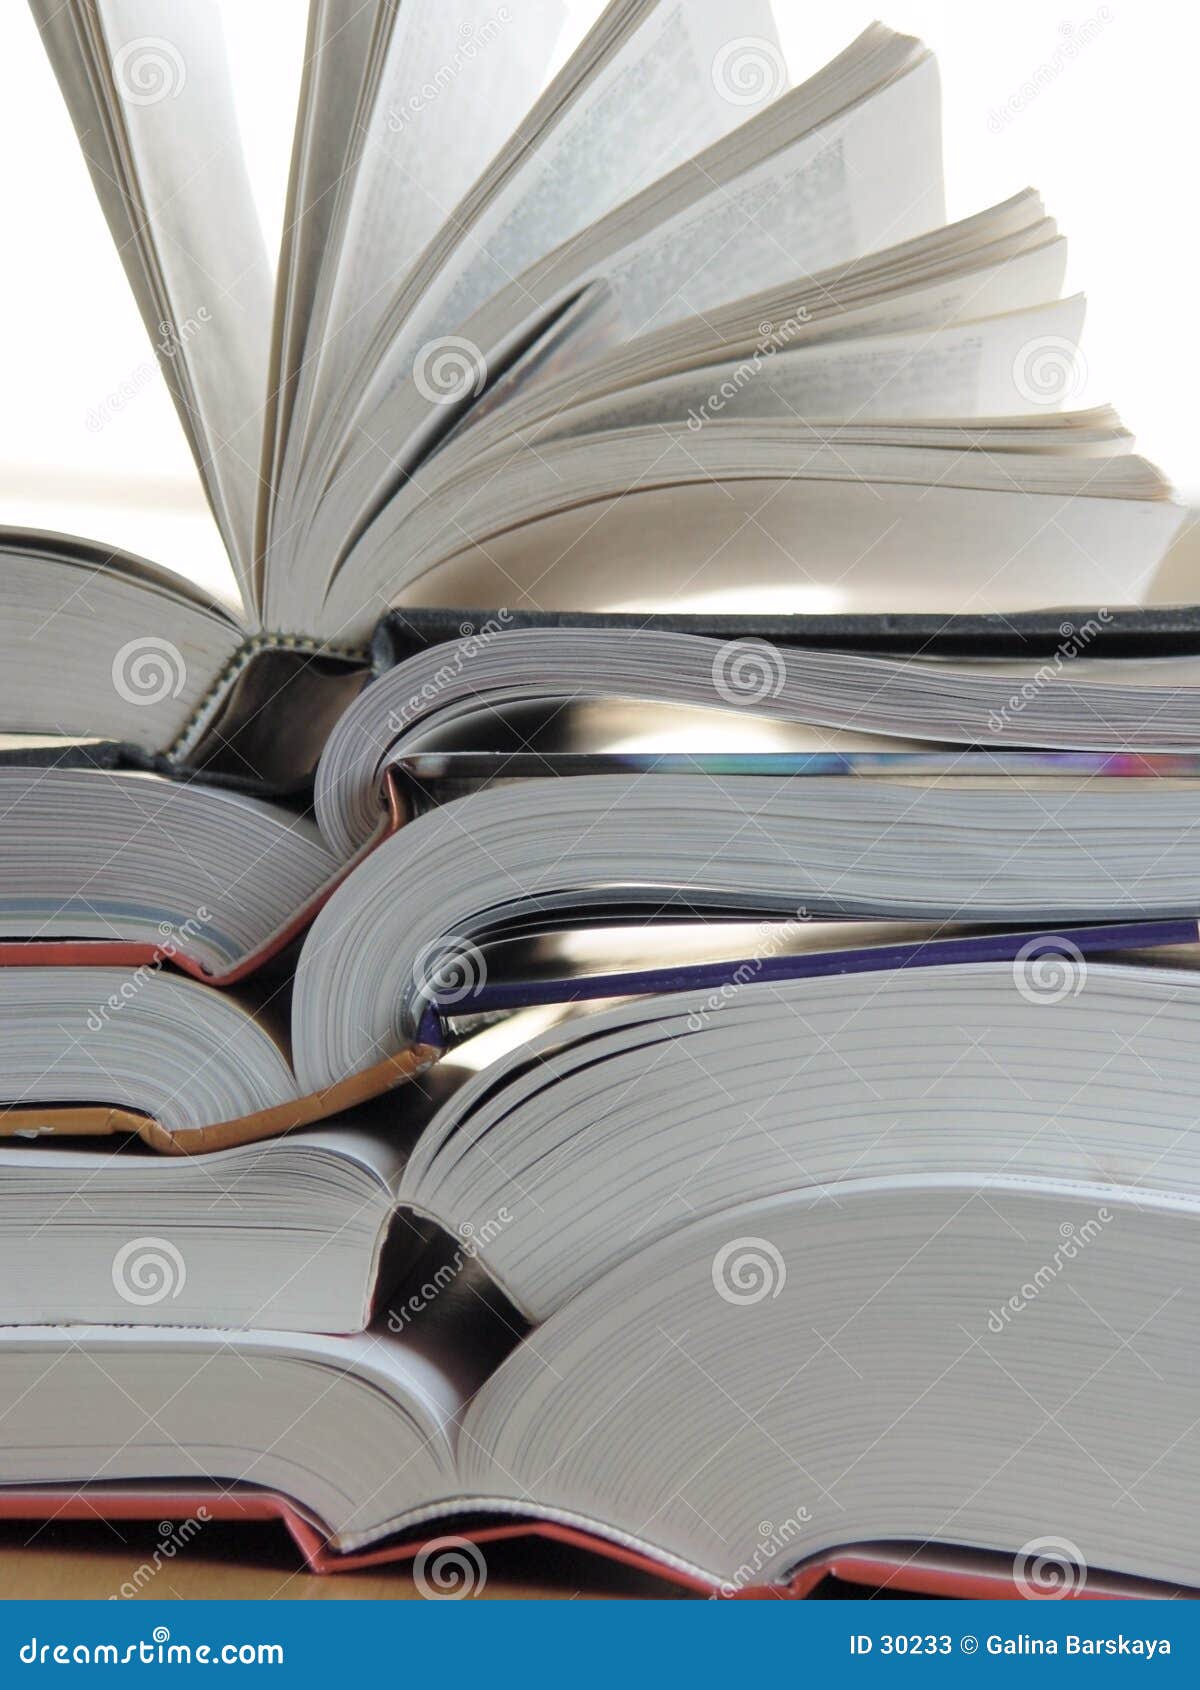 Big Books Stock Photos - Image: 30233